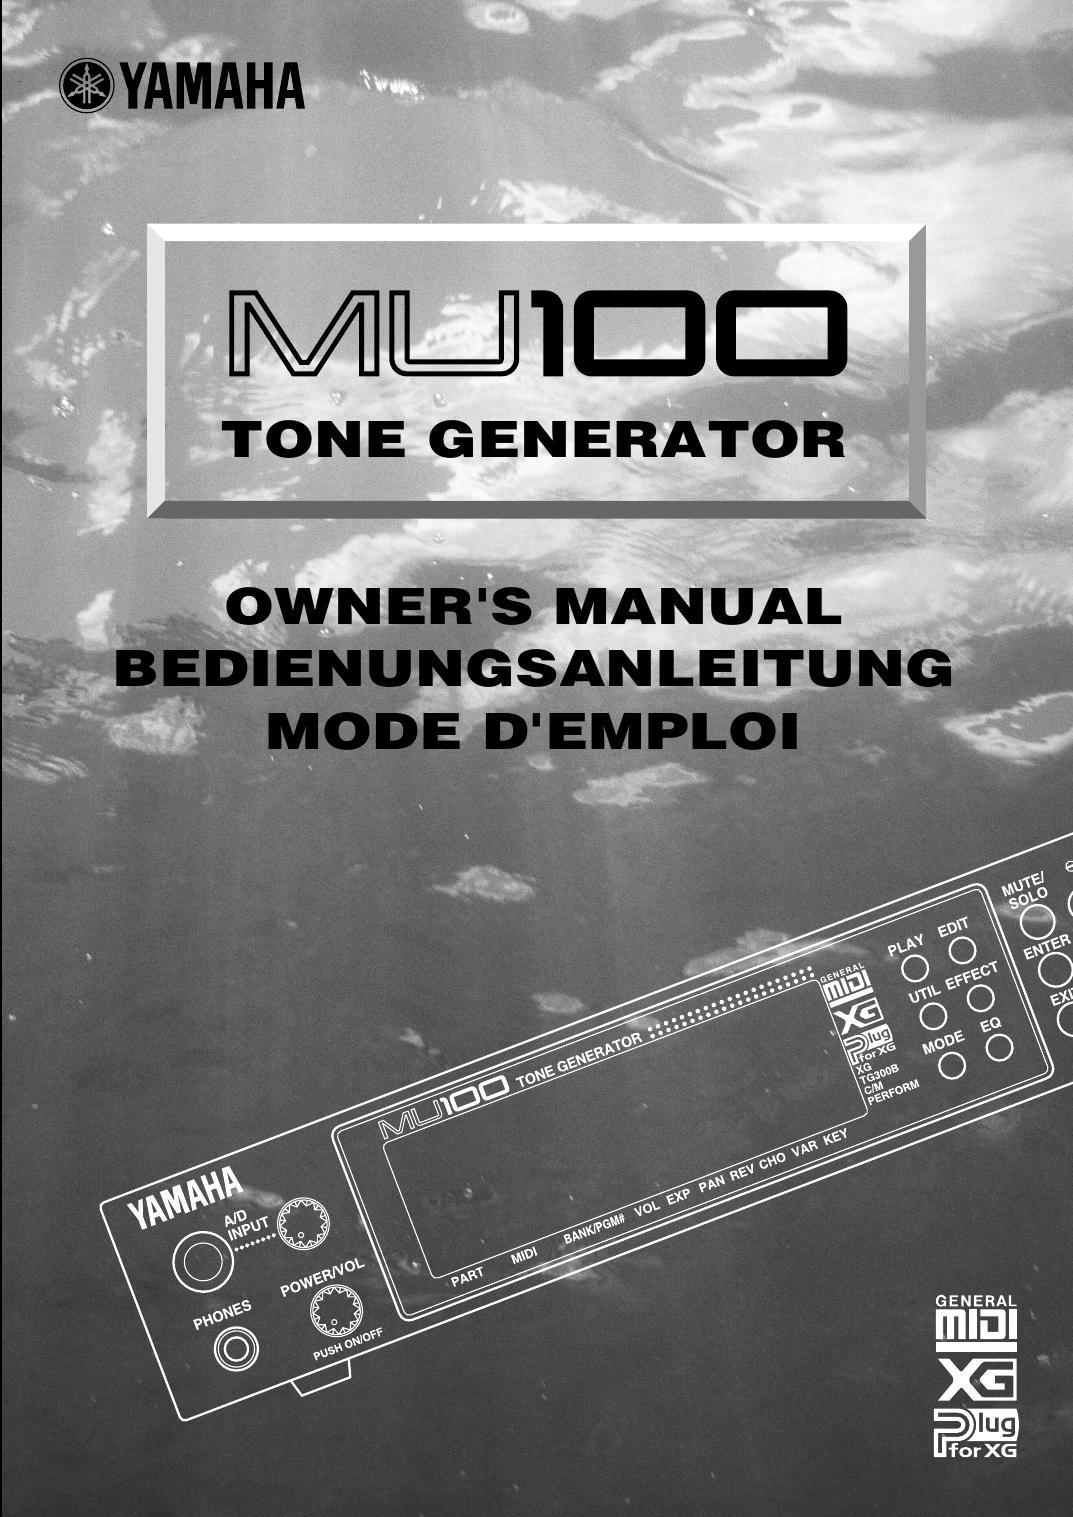 yamaha-mljioc-tone-generator-owners-manual.pdf